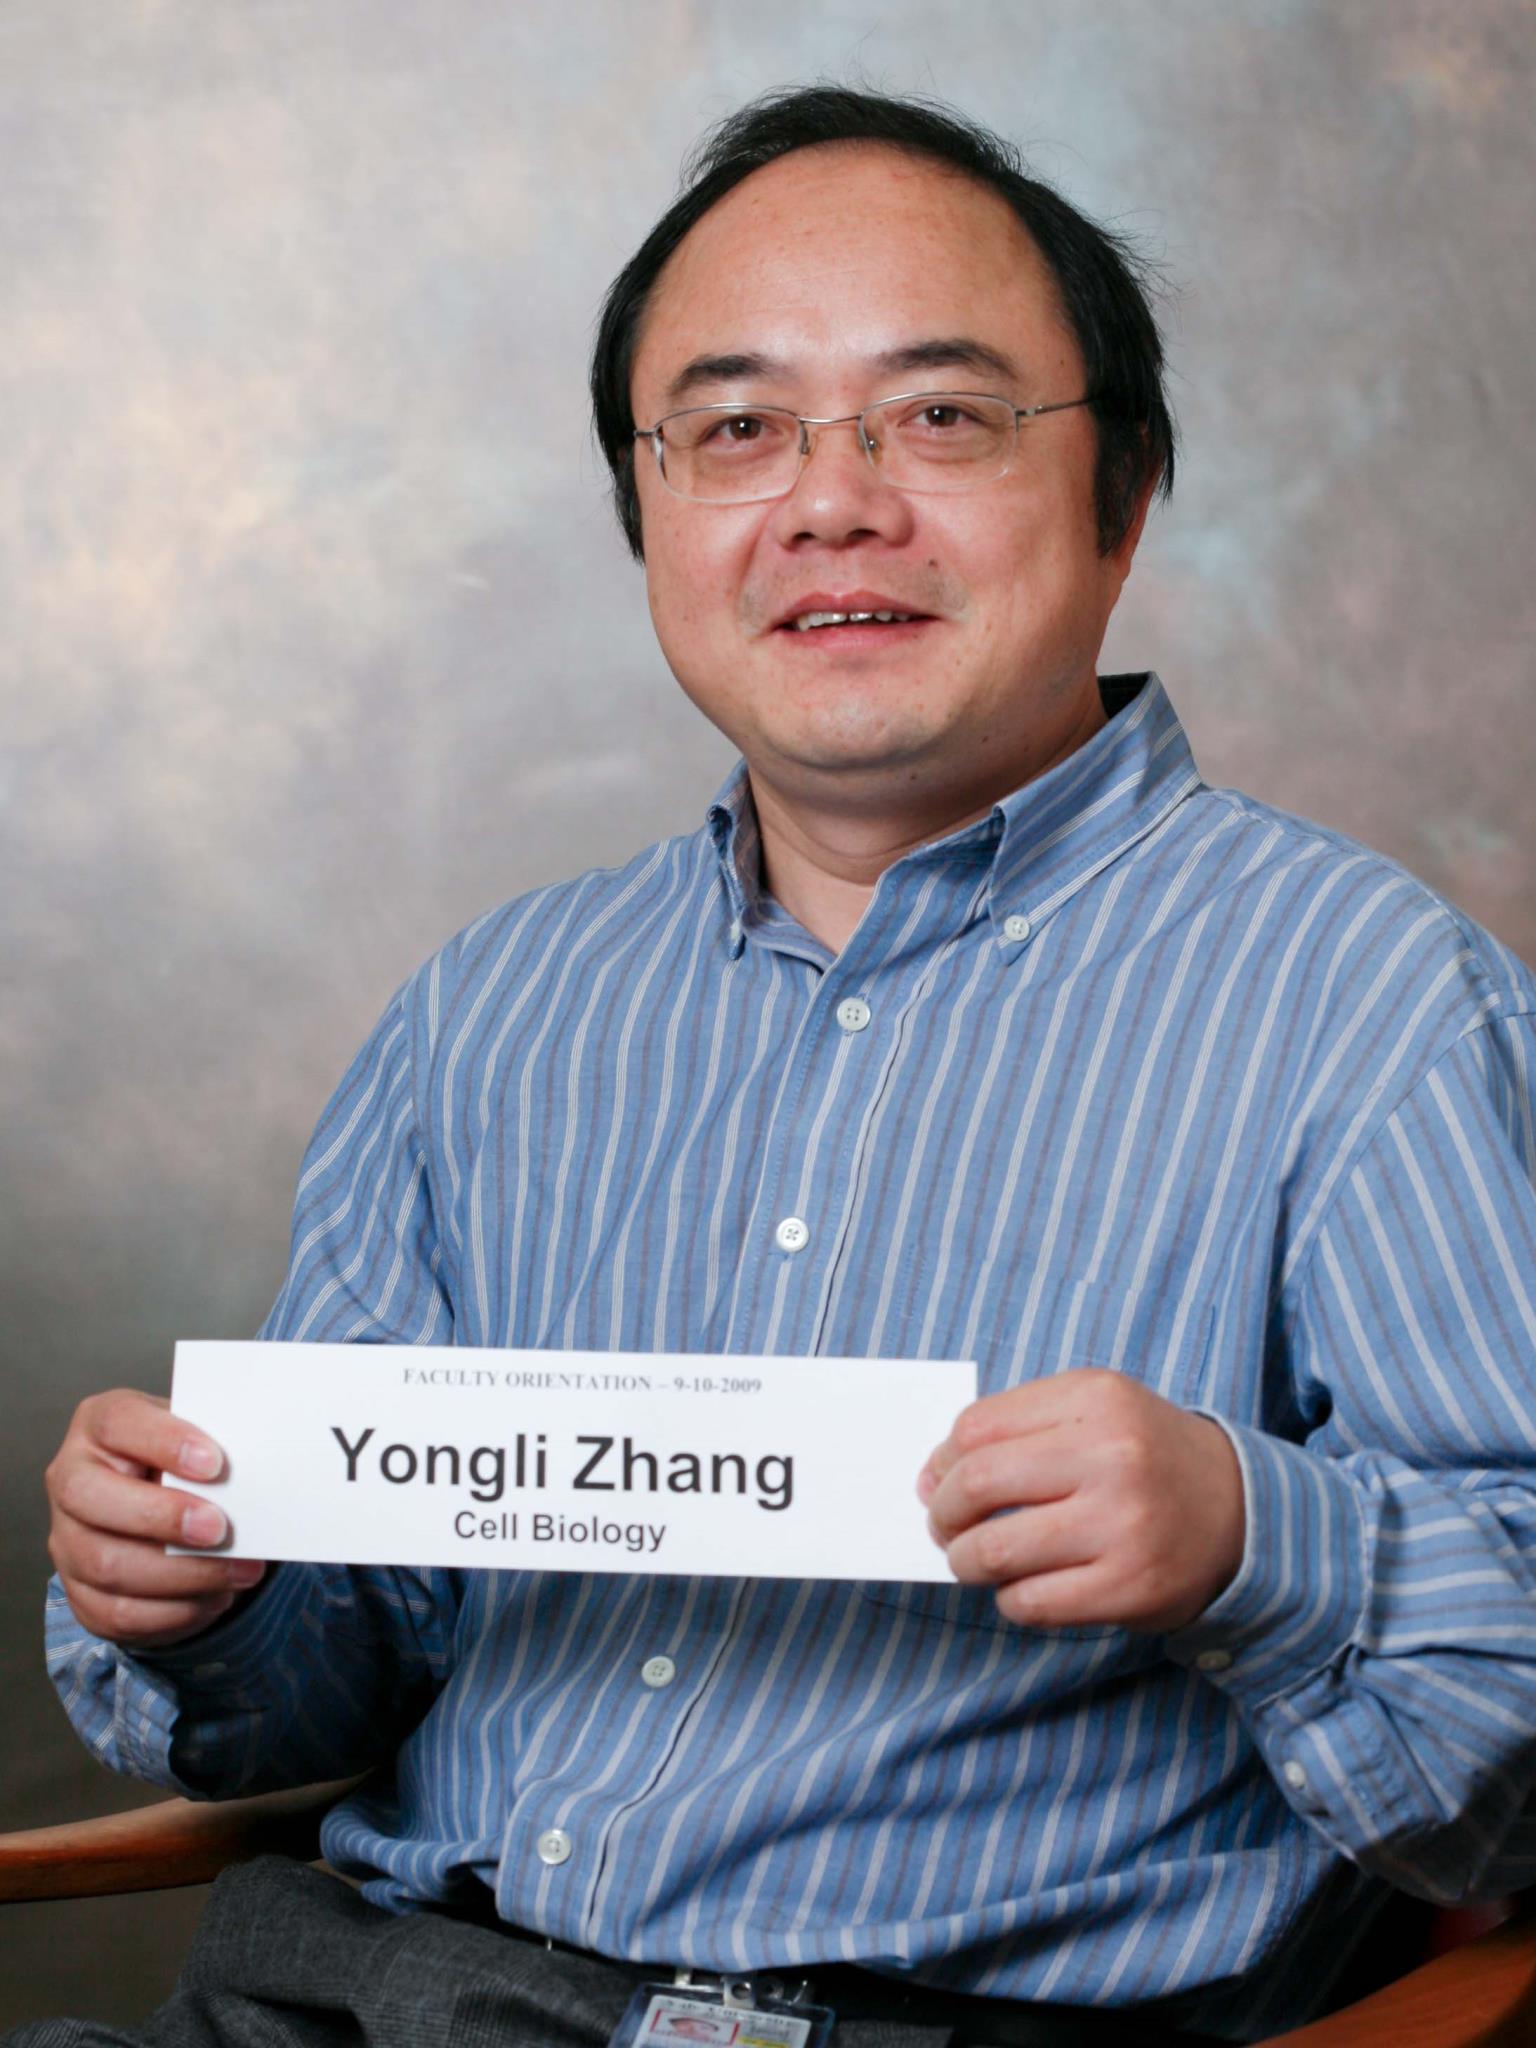 S3 - Unimore SEMINAR Yongli Zhang